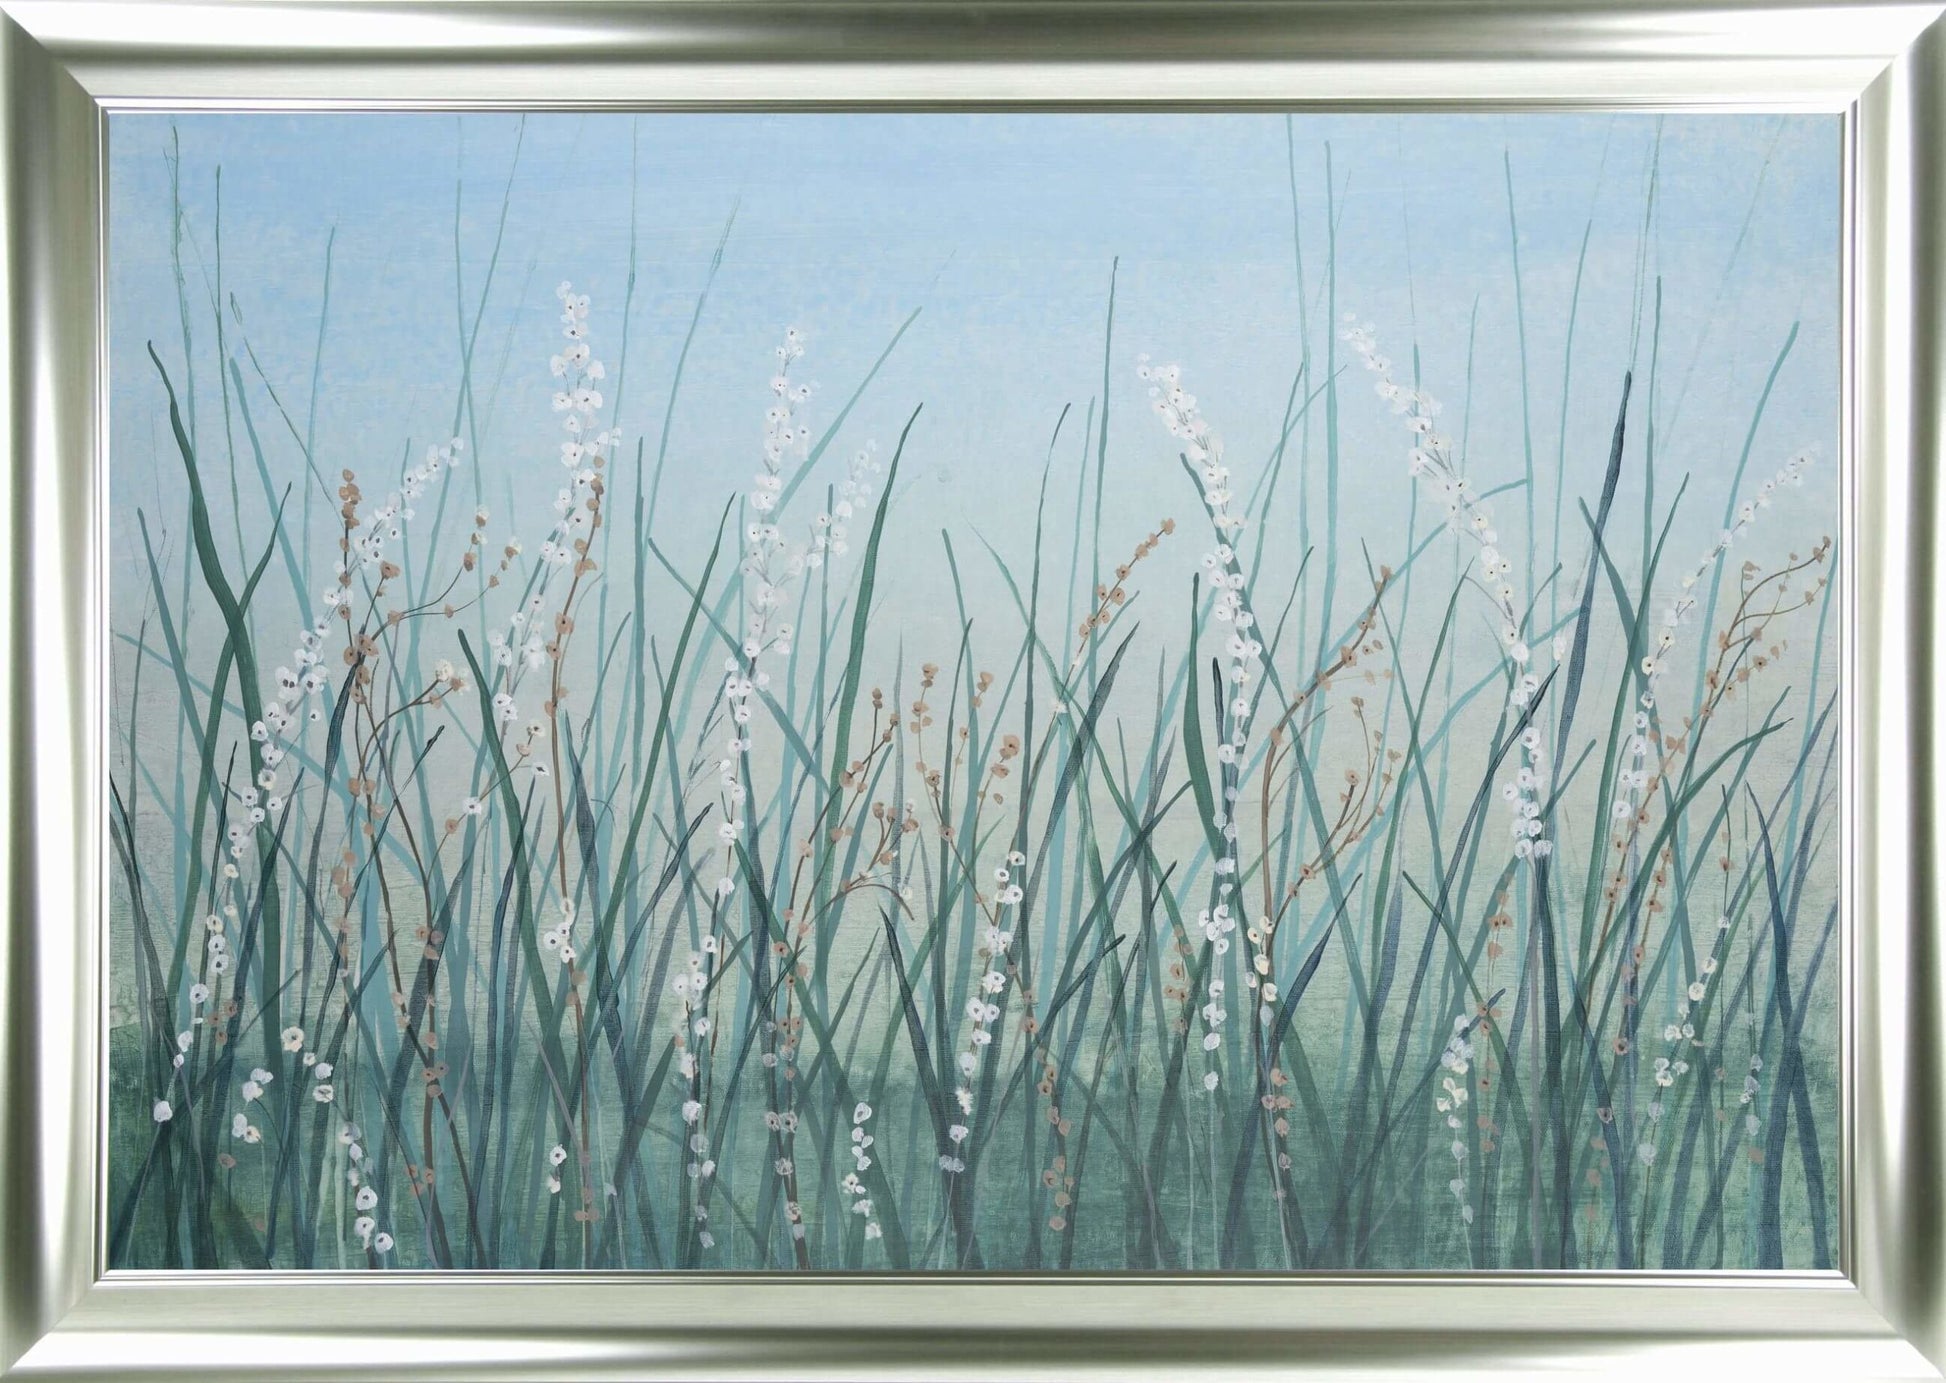 Tall Grass II framed print by Tim O'Toole